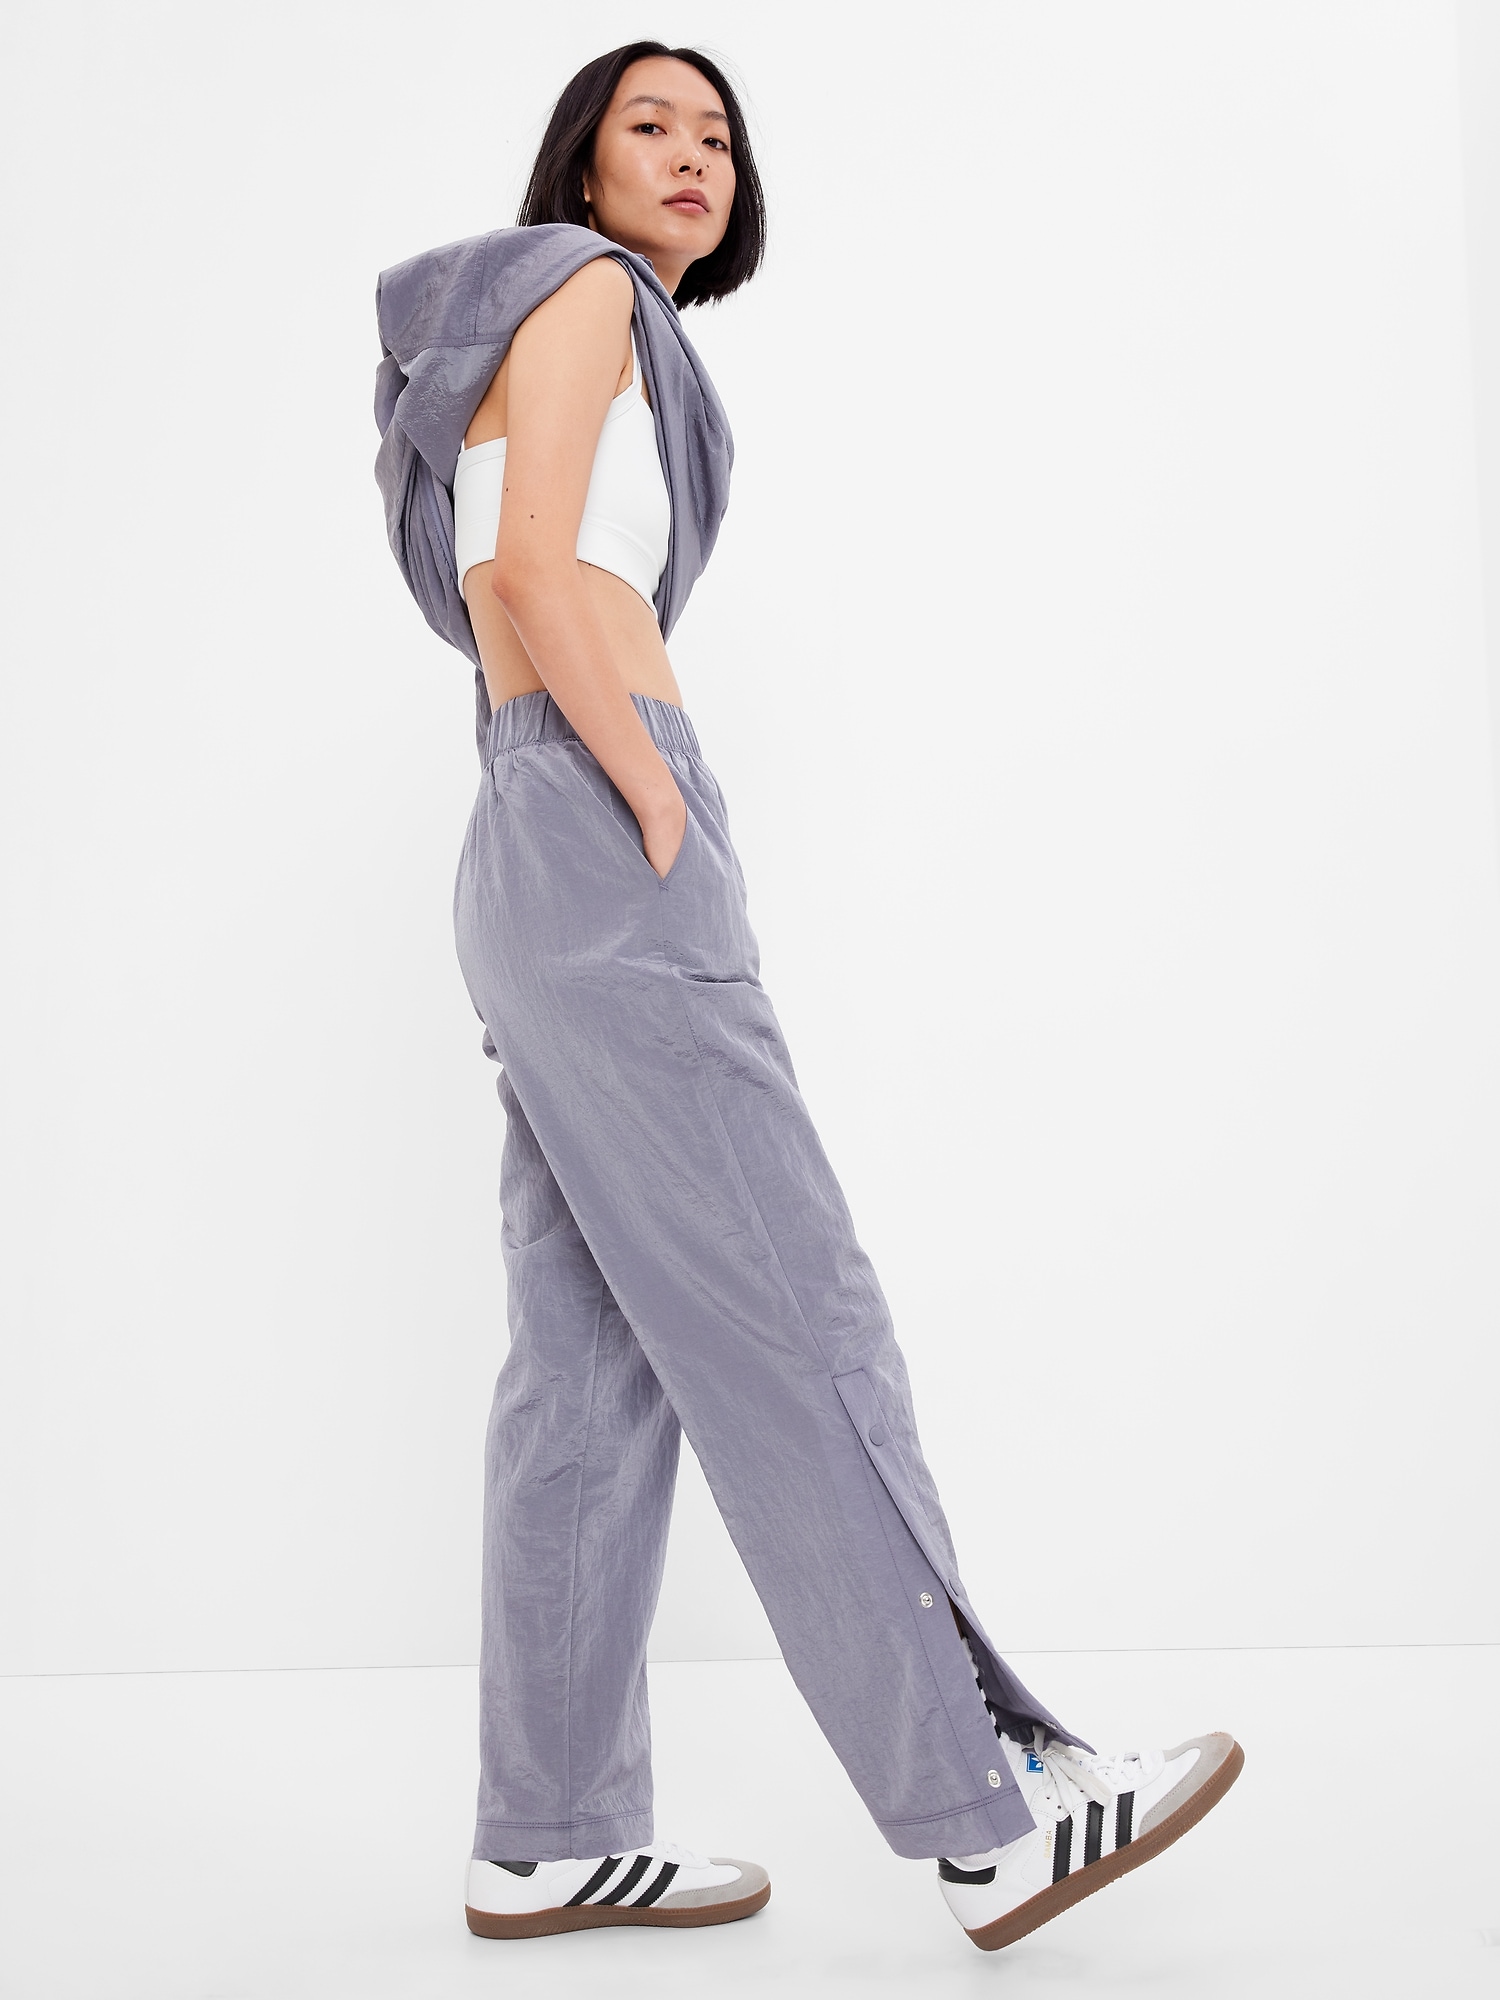 NWT Eddie Bauer Women's Flexion Polar Fleece Lined Pants Carbon - Size 16 |  eBay